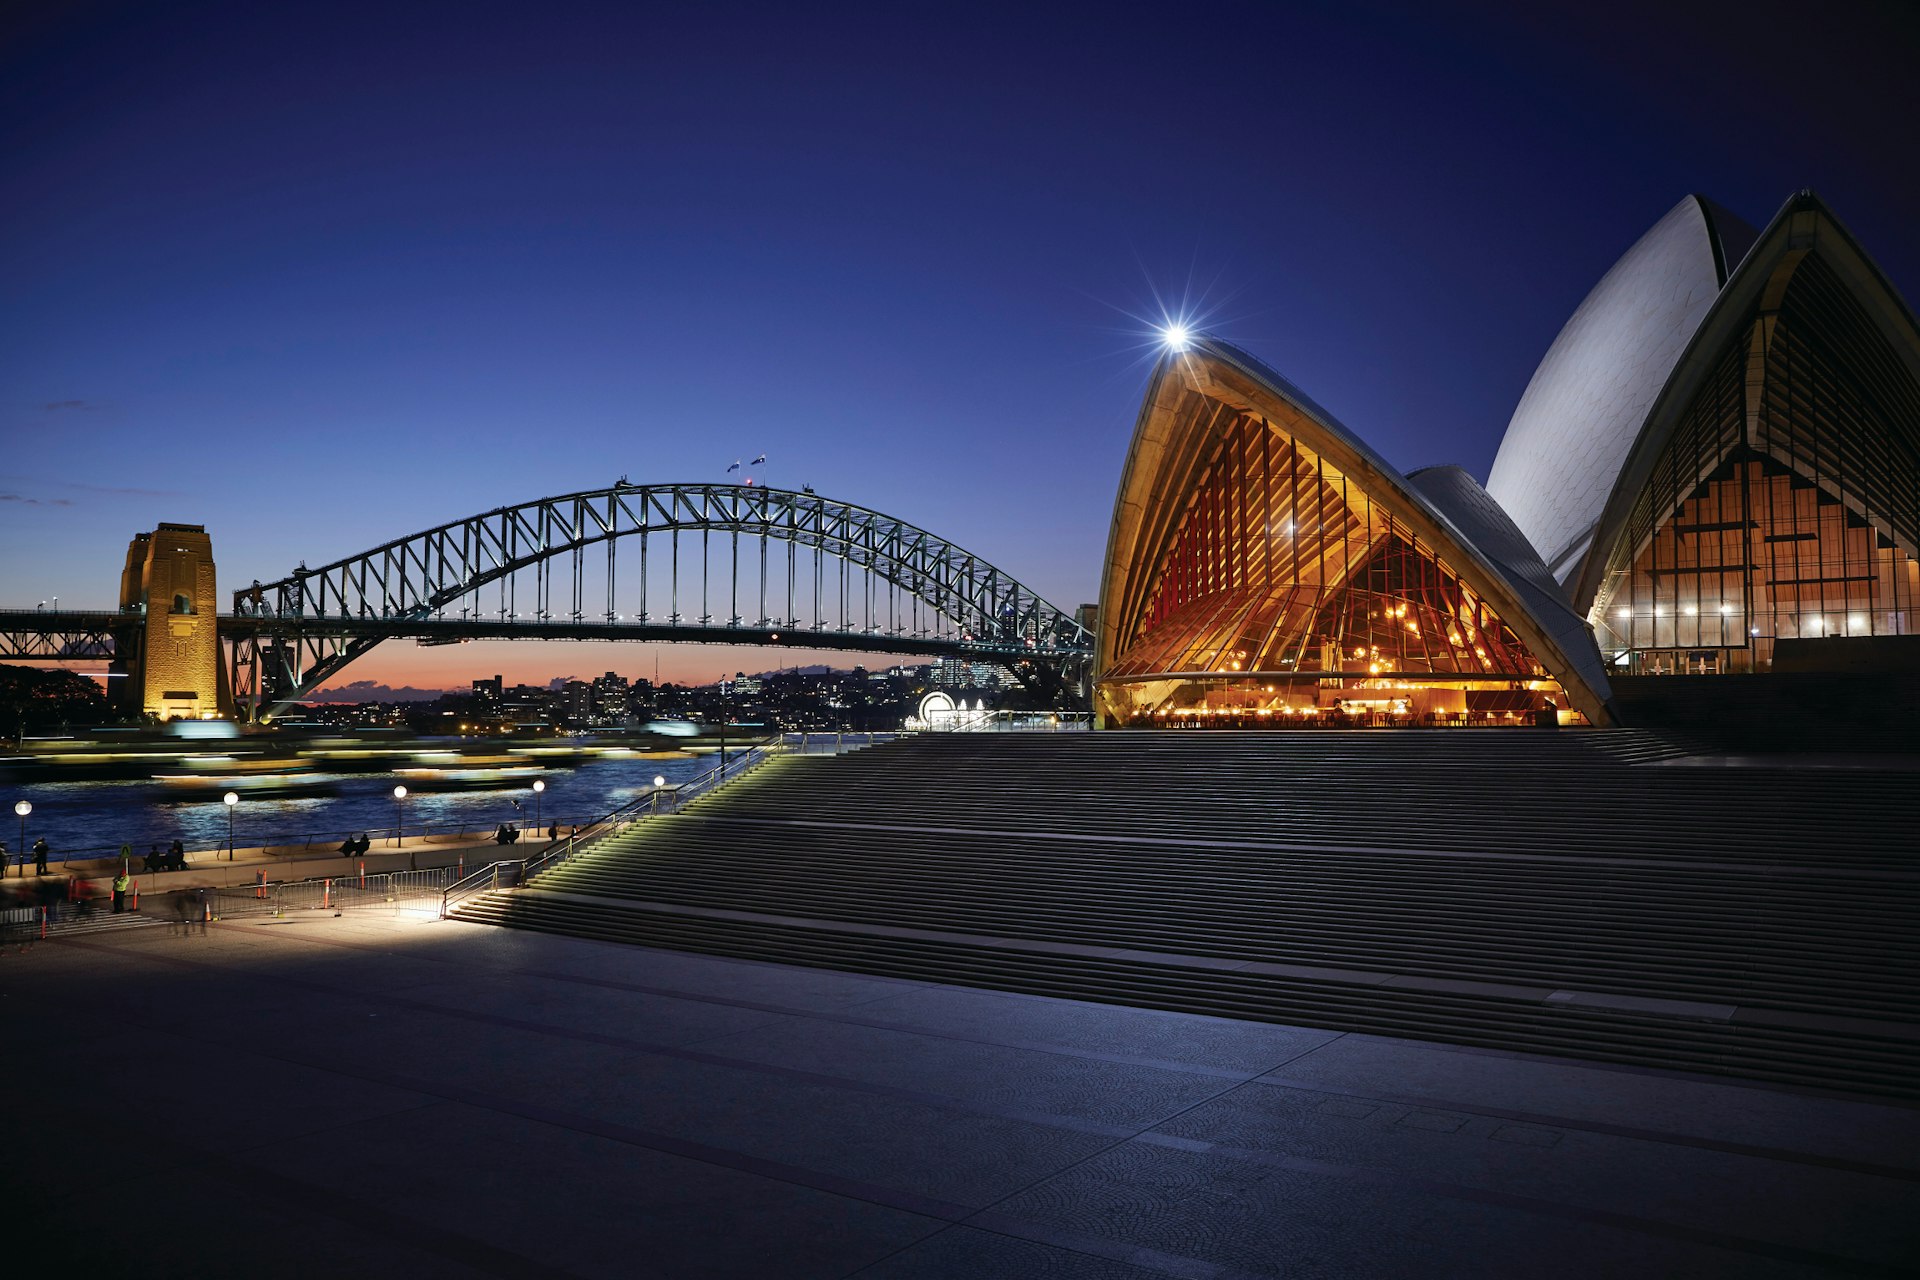 Sydney Harbour Bridge at night seen from Bennelong